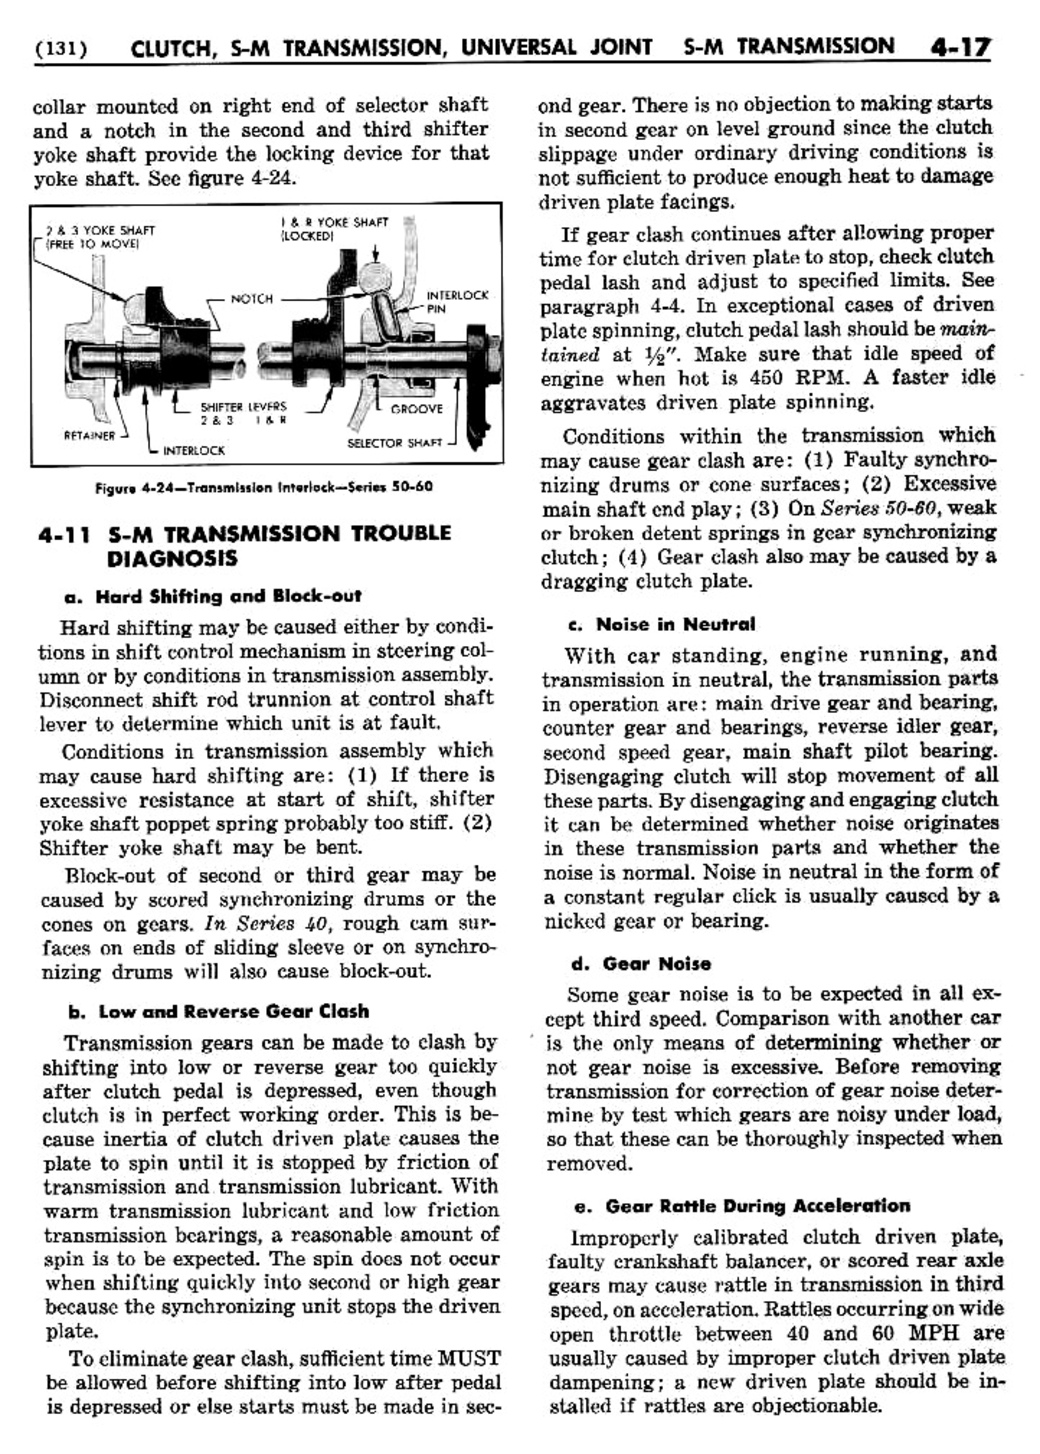 n_05 1955 Buick Shop Manual - Clutch & Trans-017-017.jpg